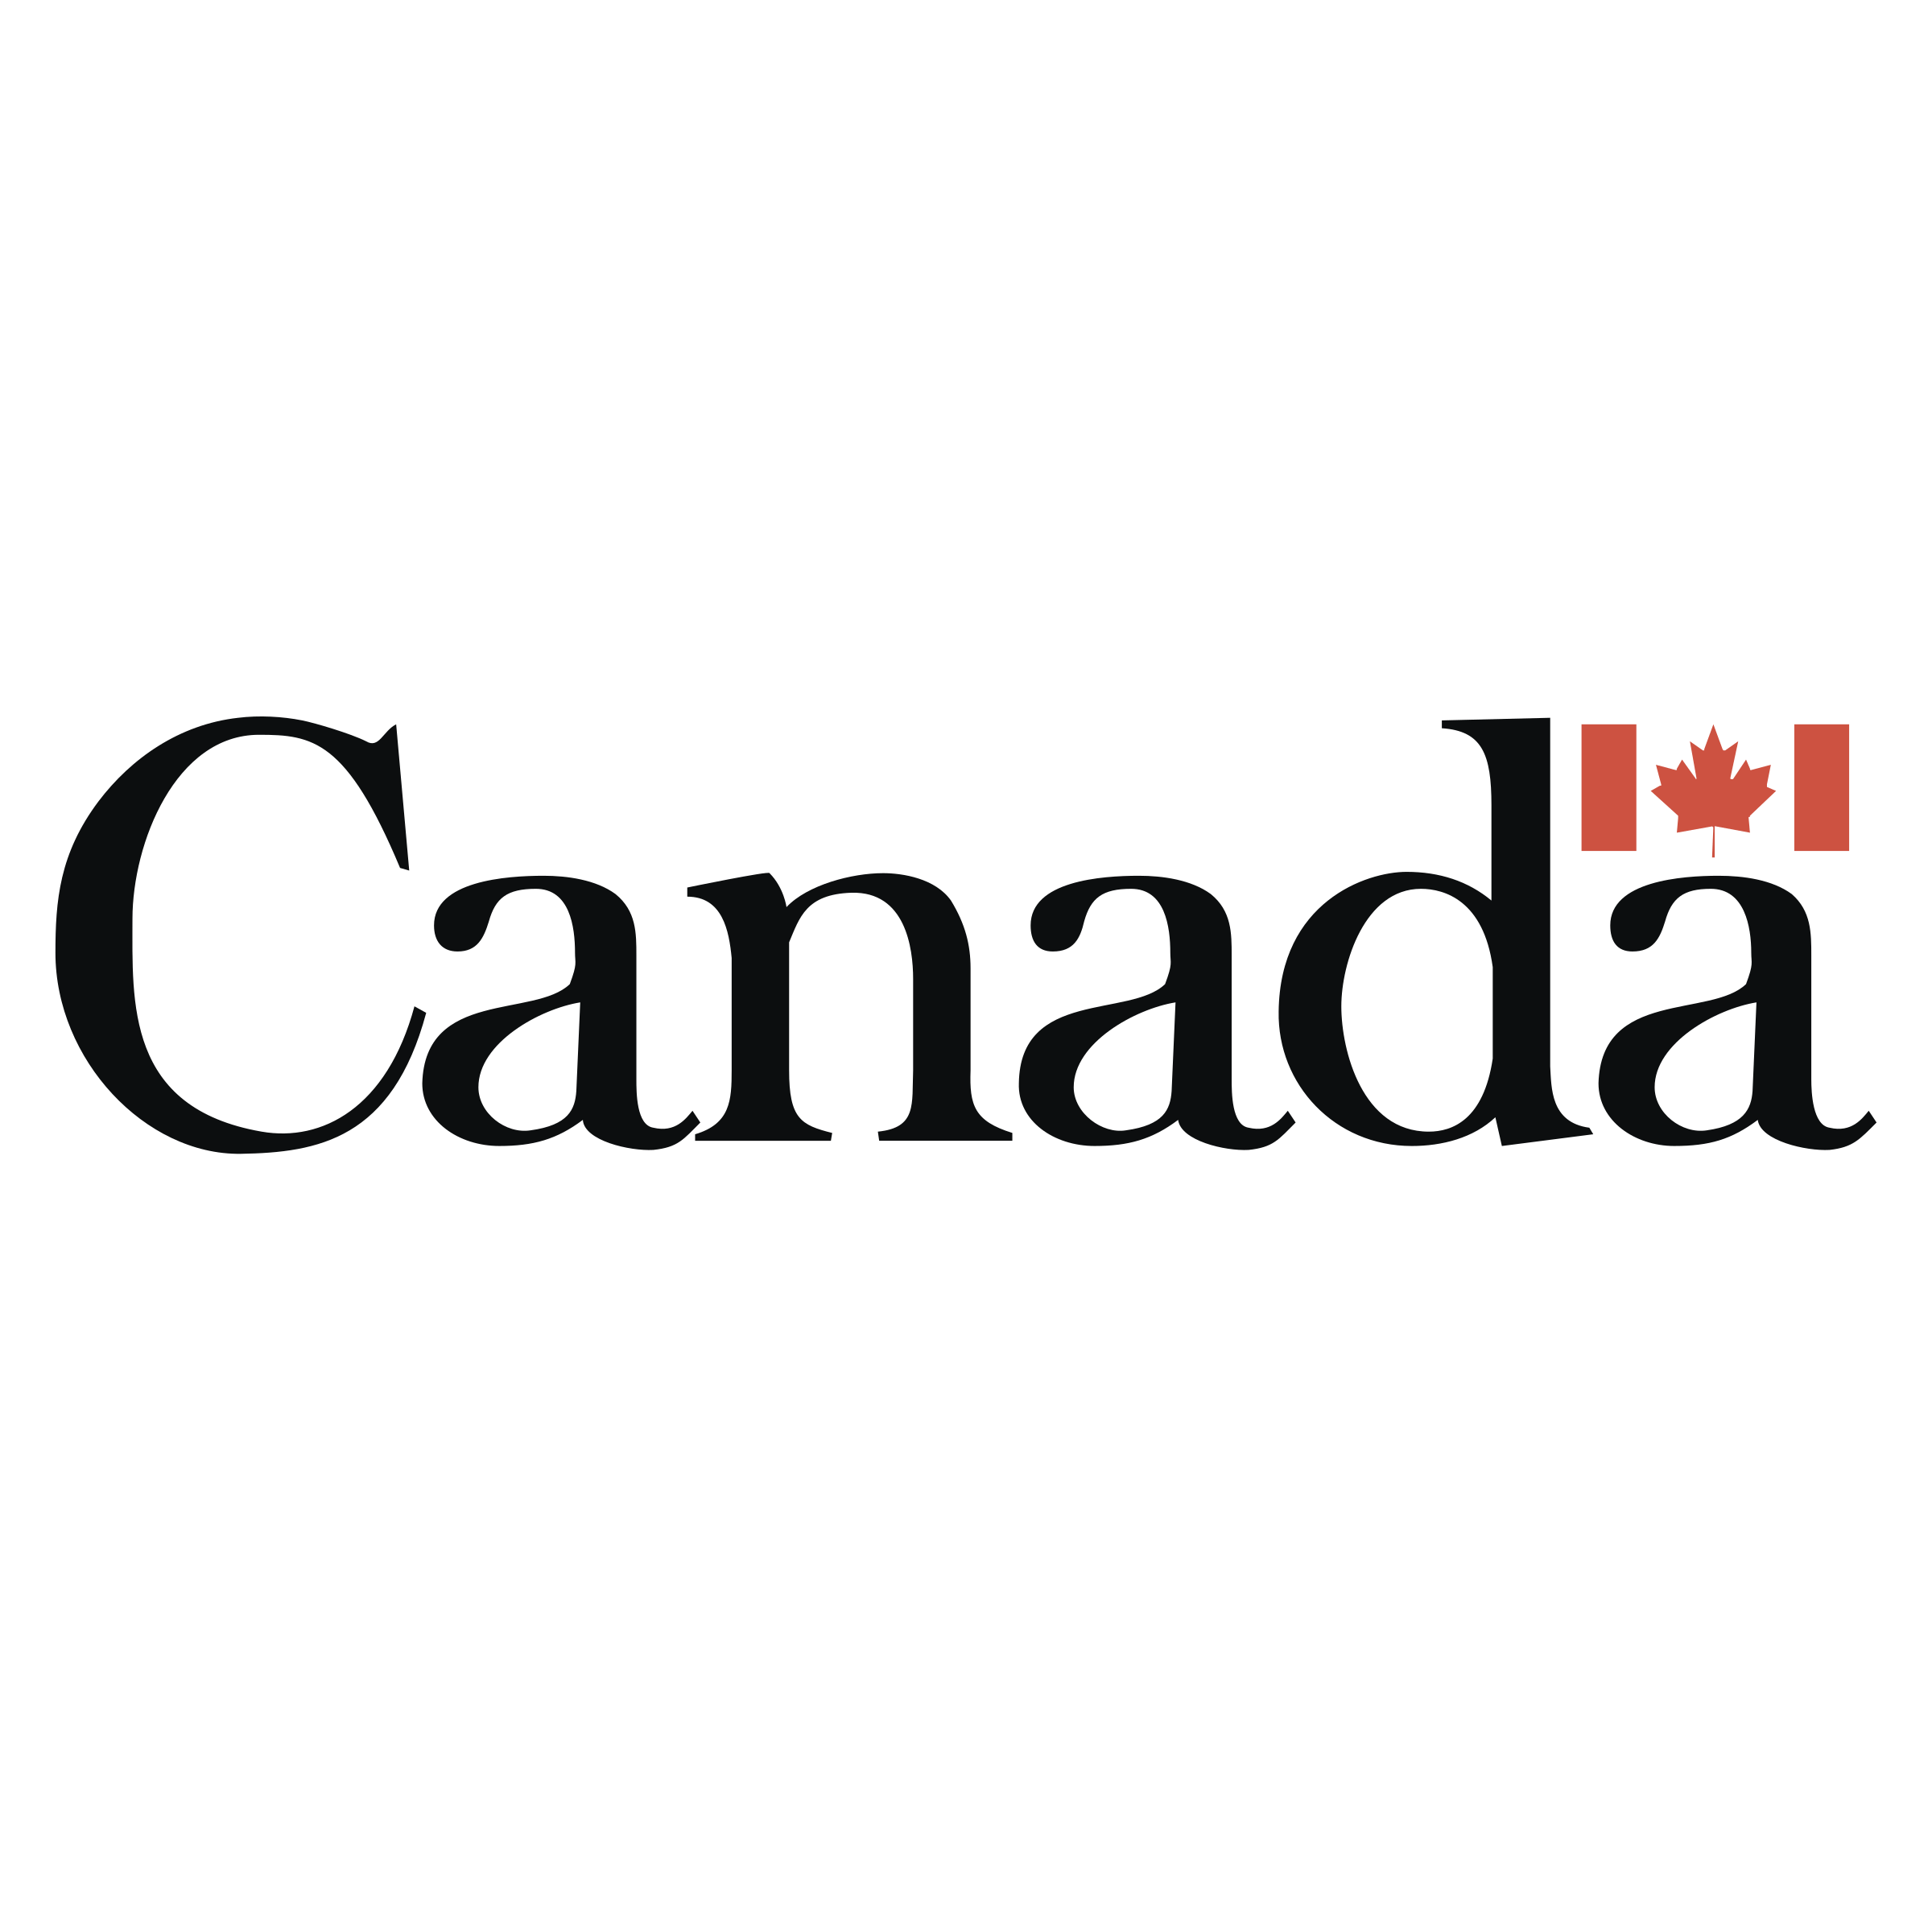 Canada White Logo - Canada Logo PNG Transparent & SVG Vector - Freebie Supply